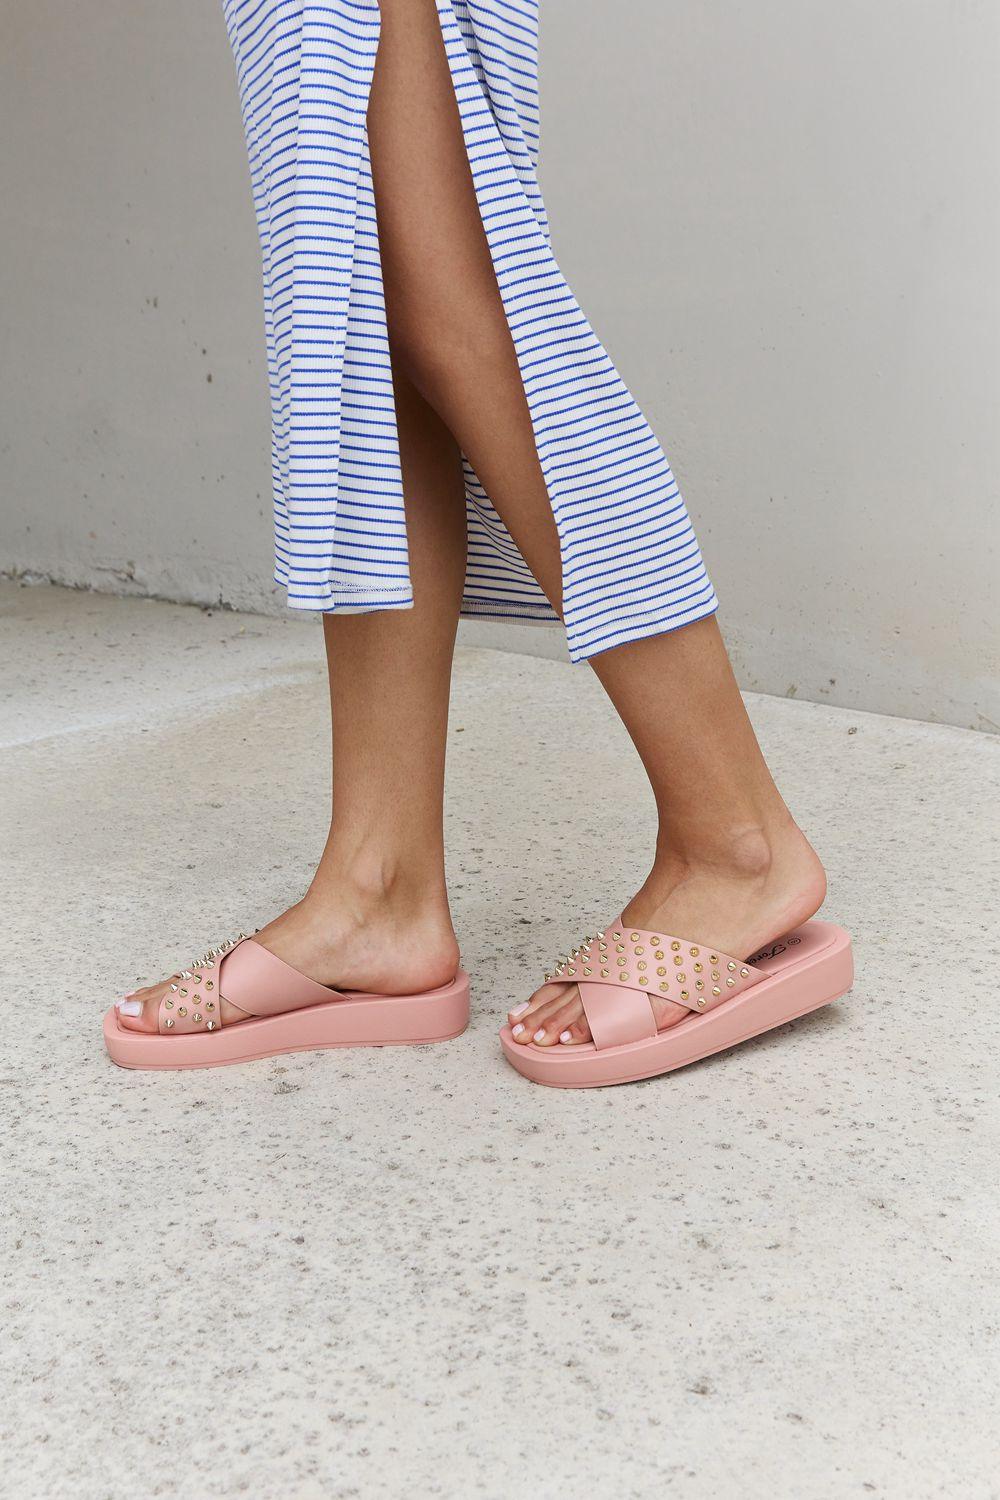 Bona Fide Fashion - Link Studded Cross Strap Sandals in Blush - Women Fashion - Bona Fide Fashion